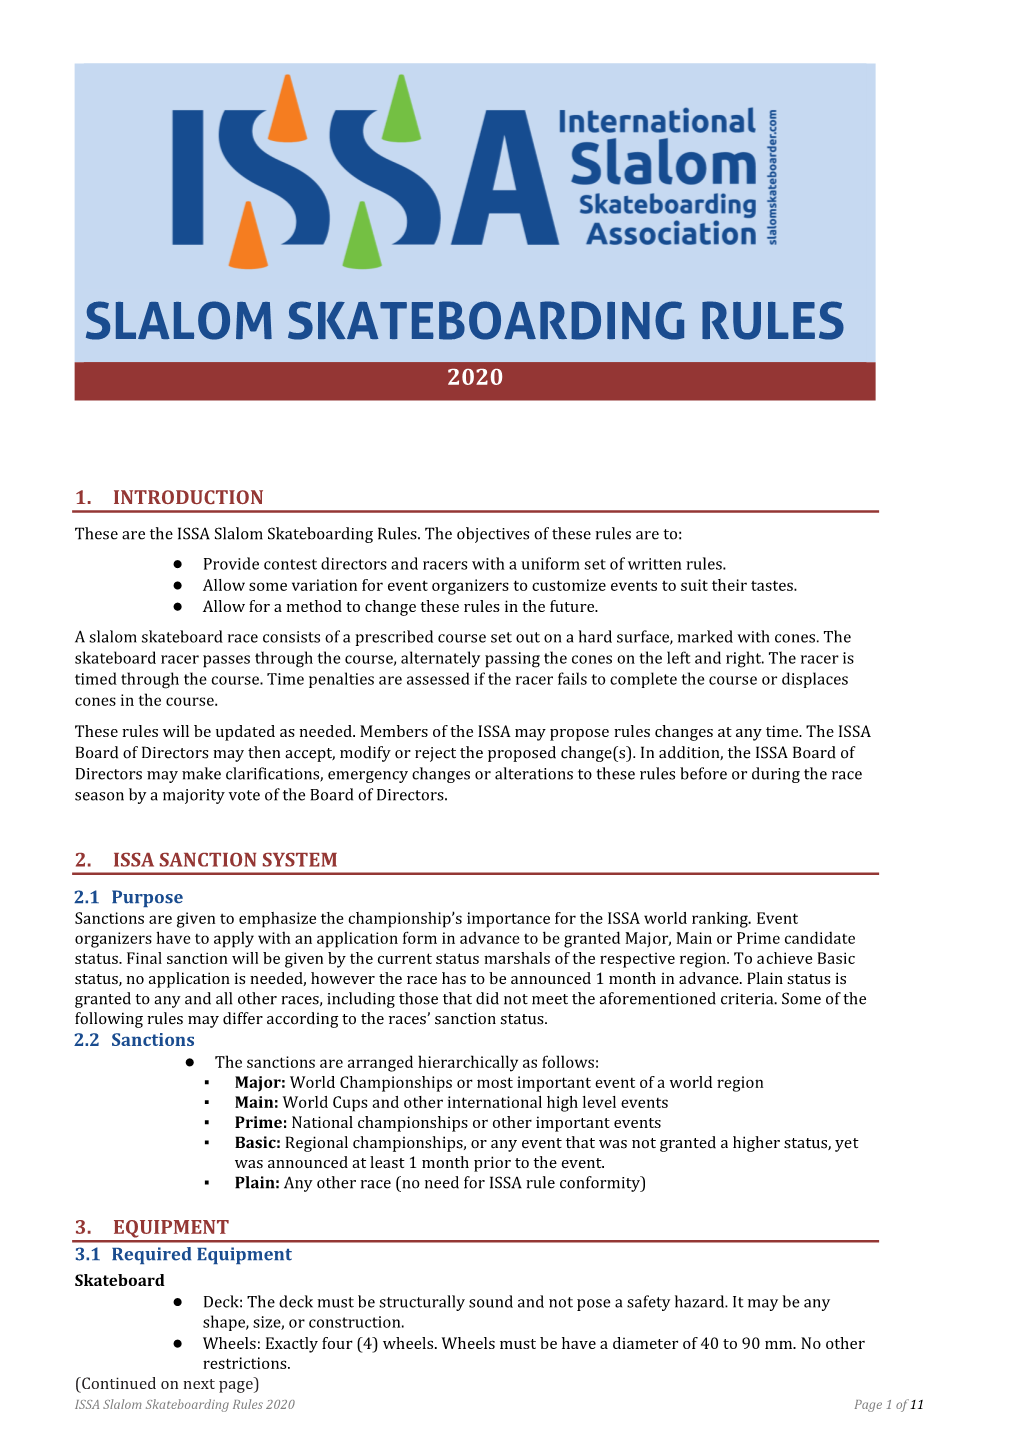 ISSA Slalom Skateboarding Rules